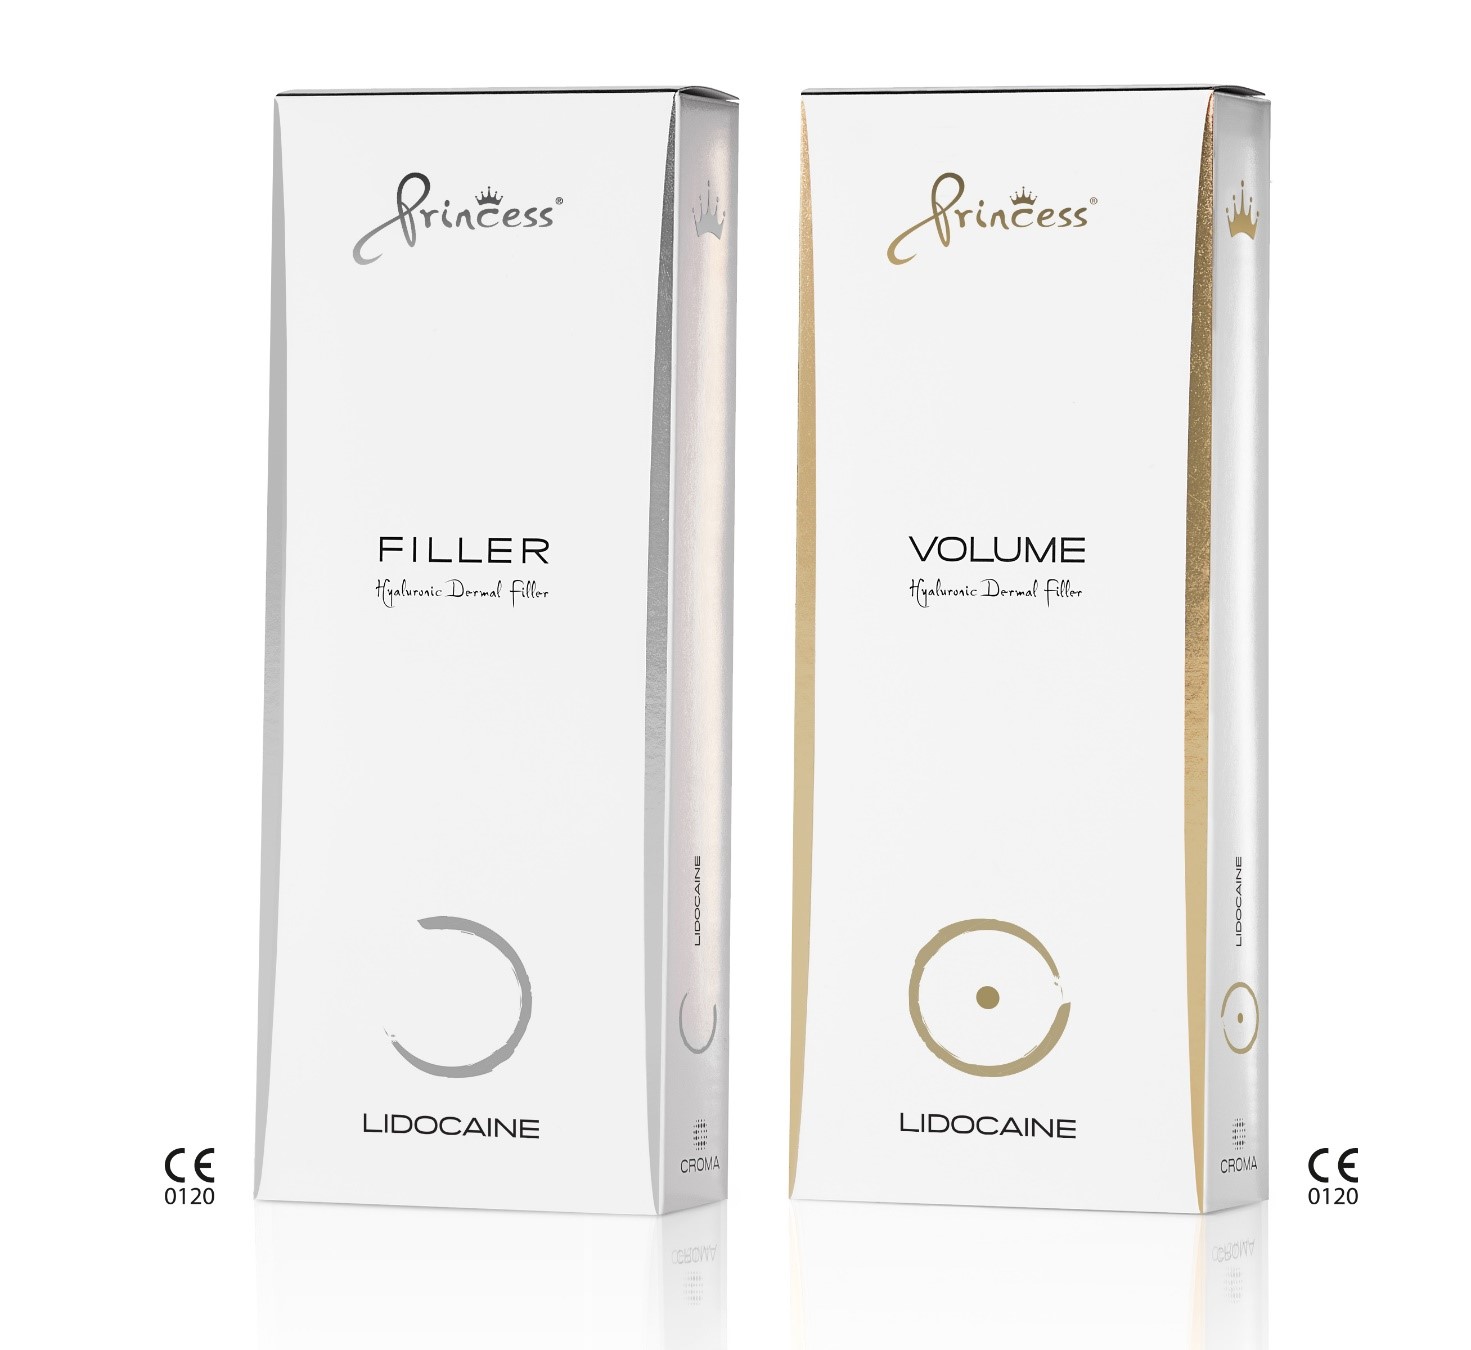 Princess Filler Hyaluronic Acid Filler HA Filler Dermal Filler made in Korea https___wellsglobal_kr_